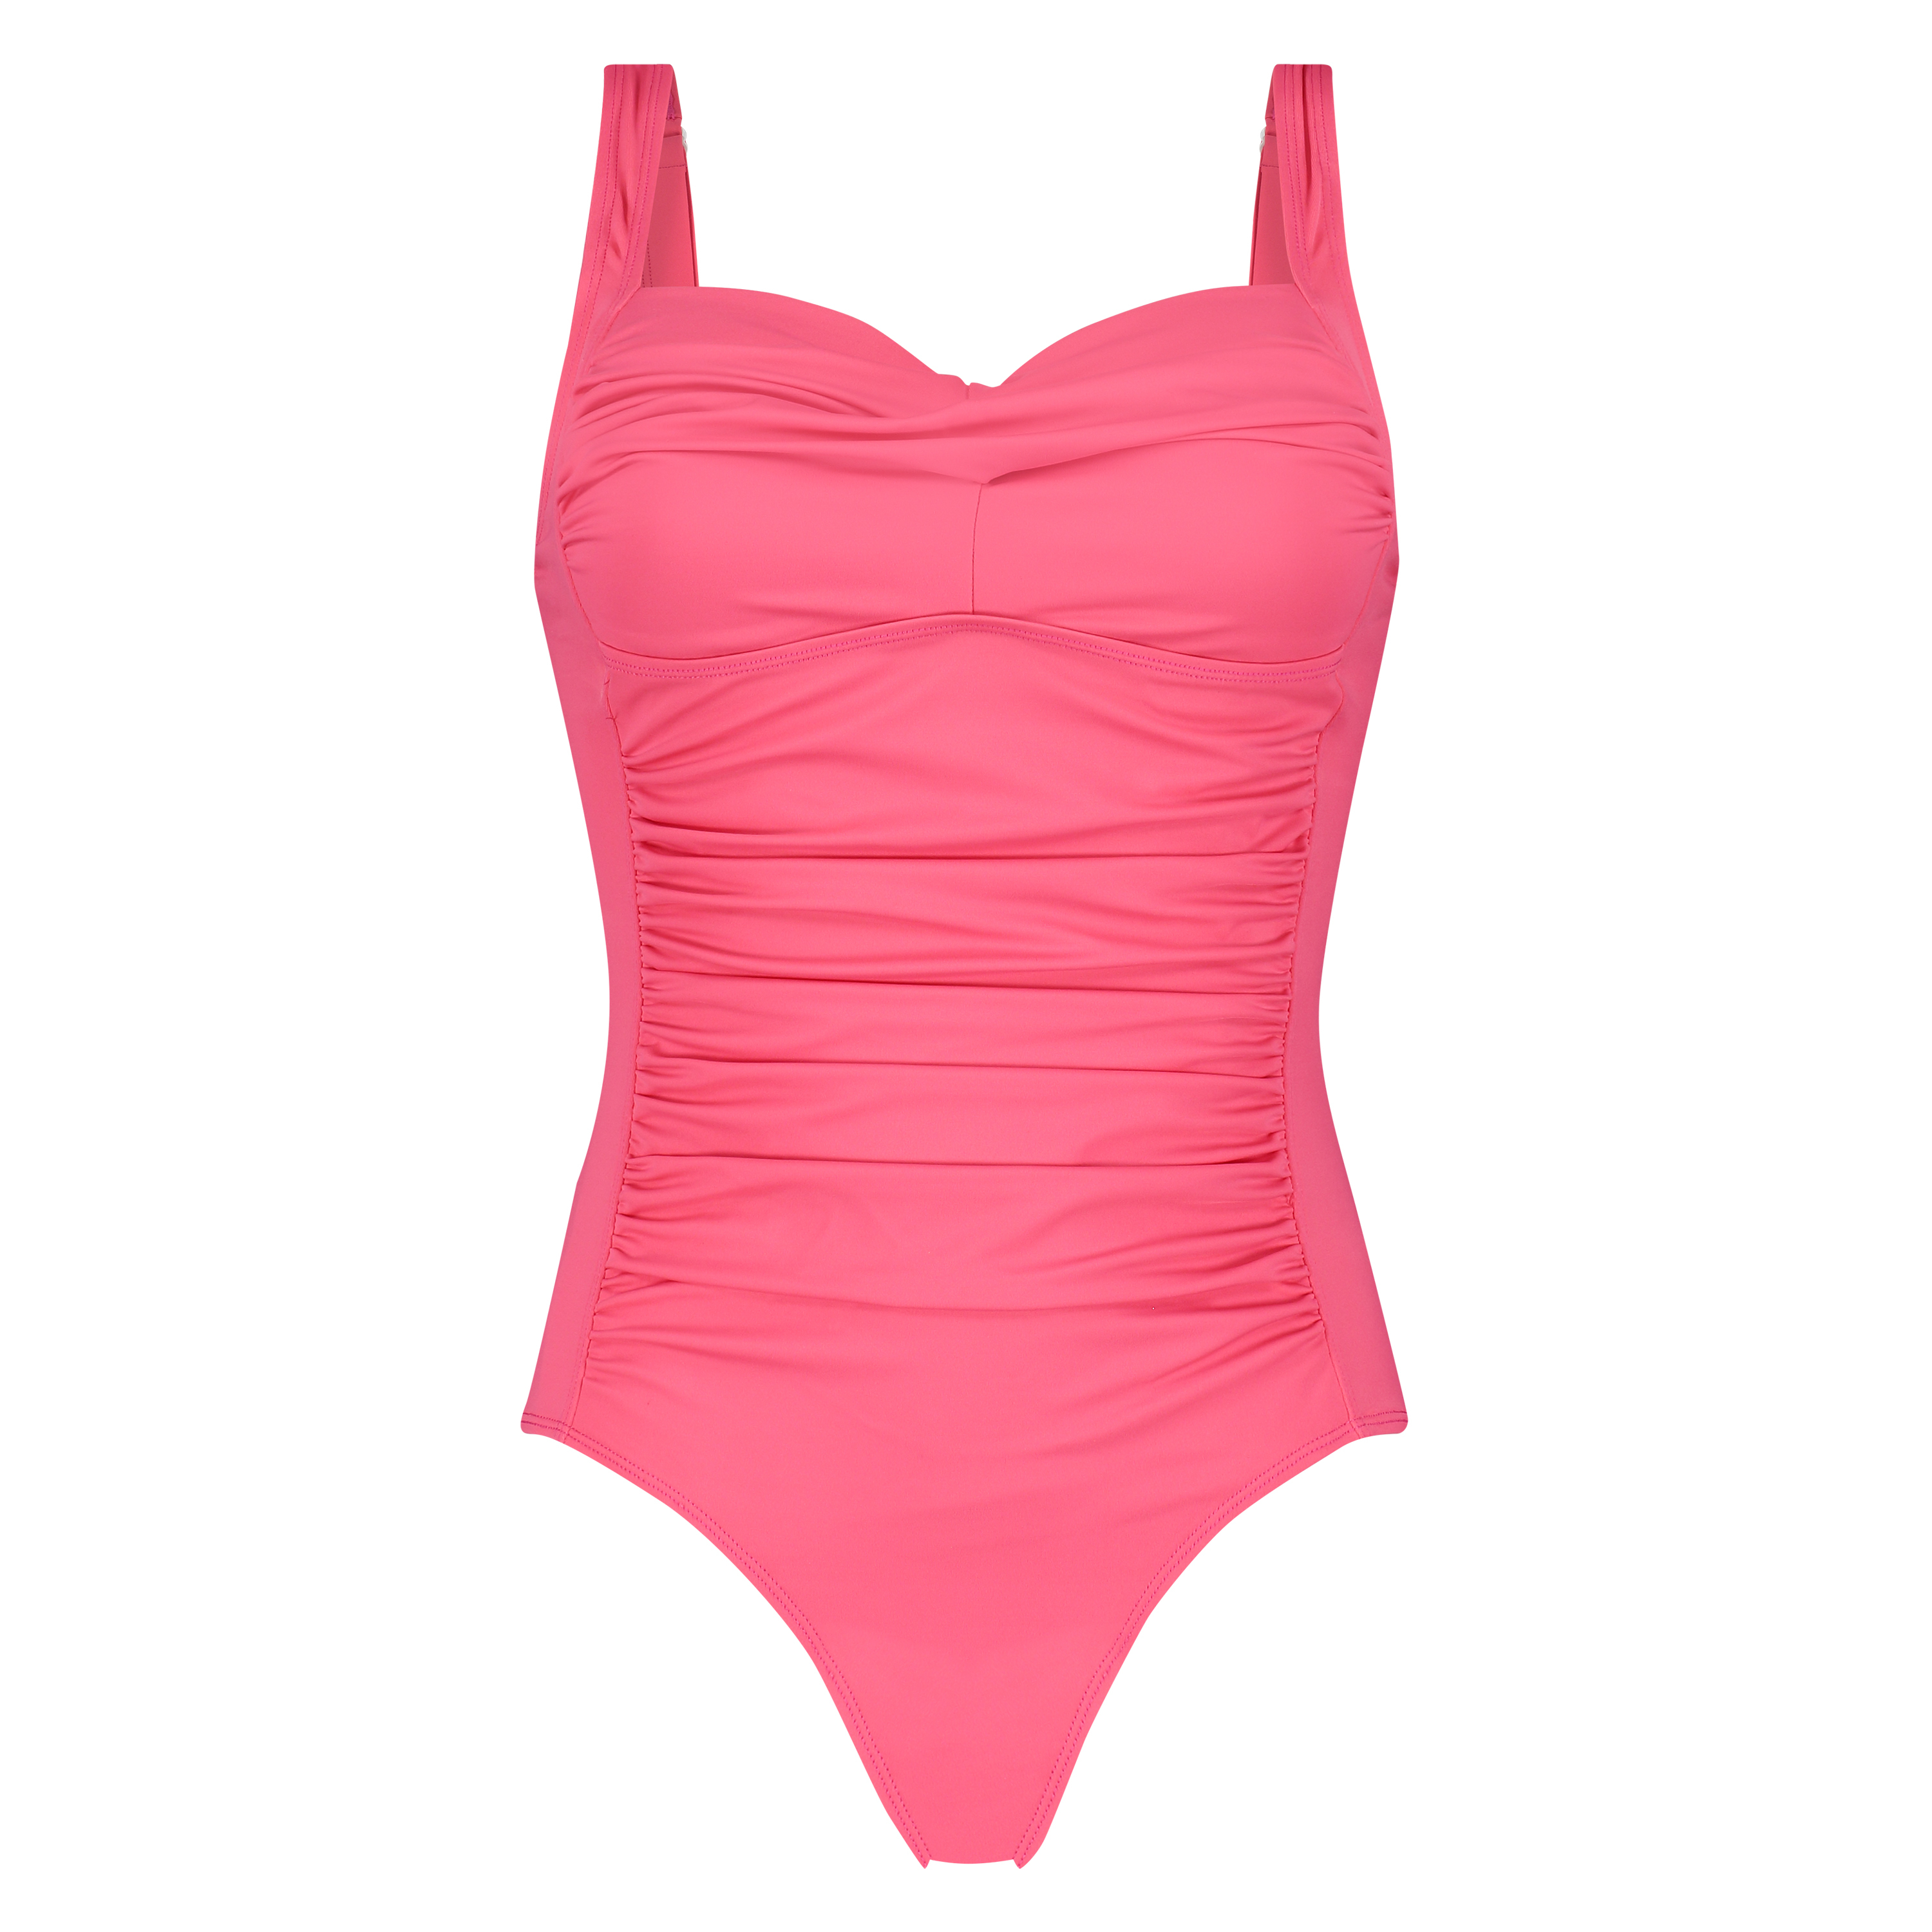 Sunset Dreams Ocean swimsuit, Pink, main